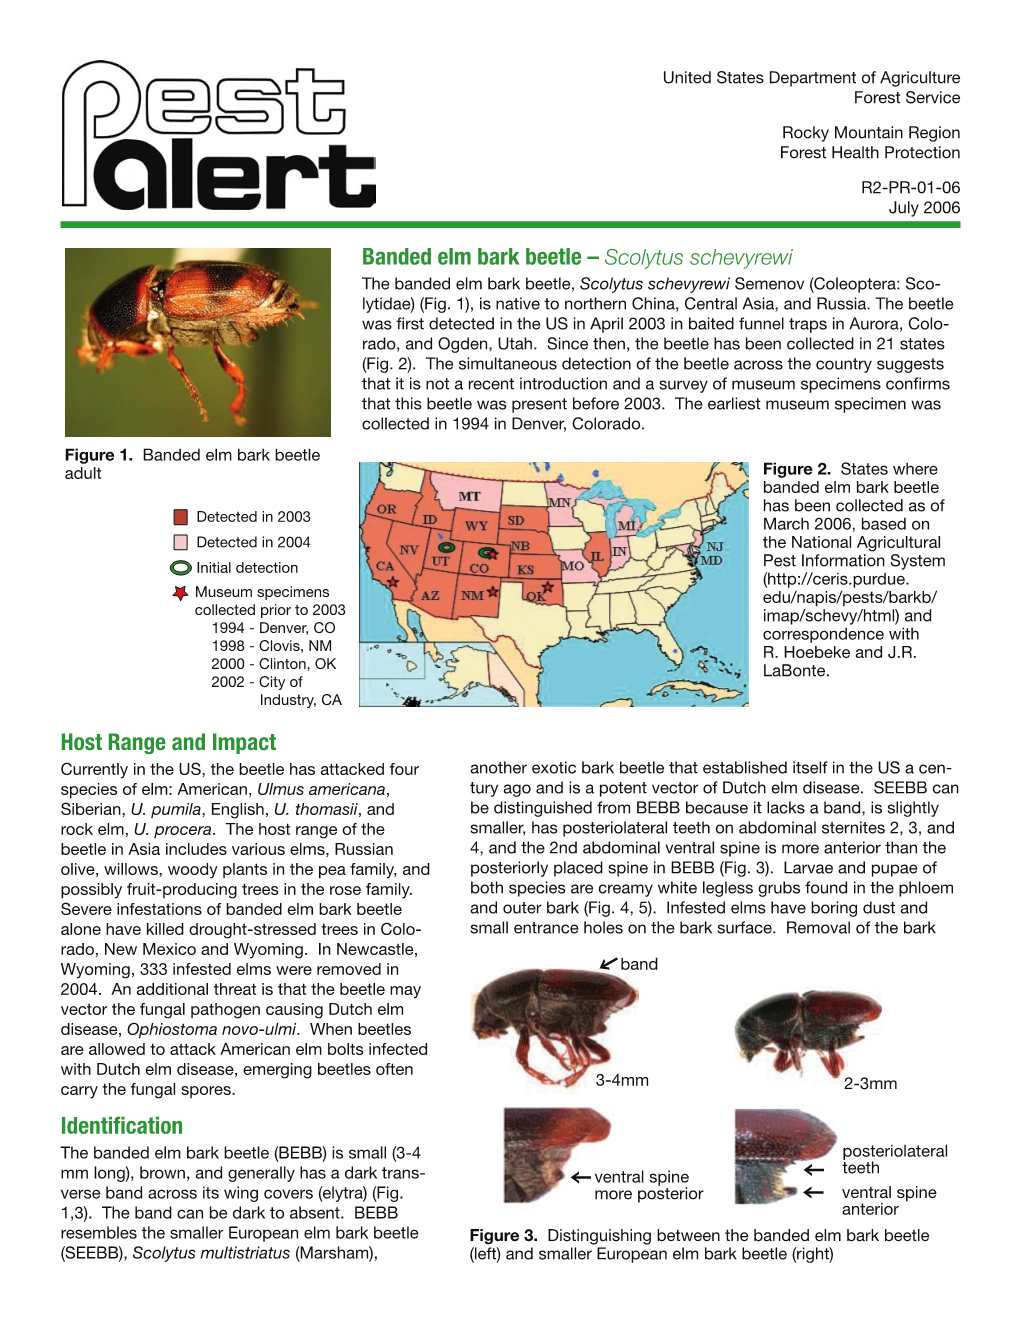 Banded Elm Bark Beetle – Scolytus Schevyrewi Host Range and Impact